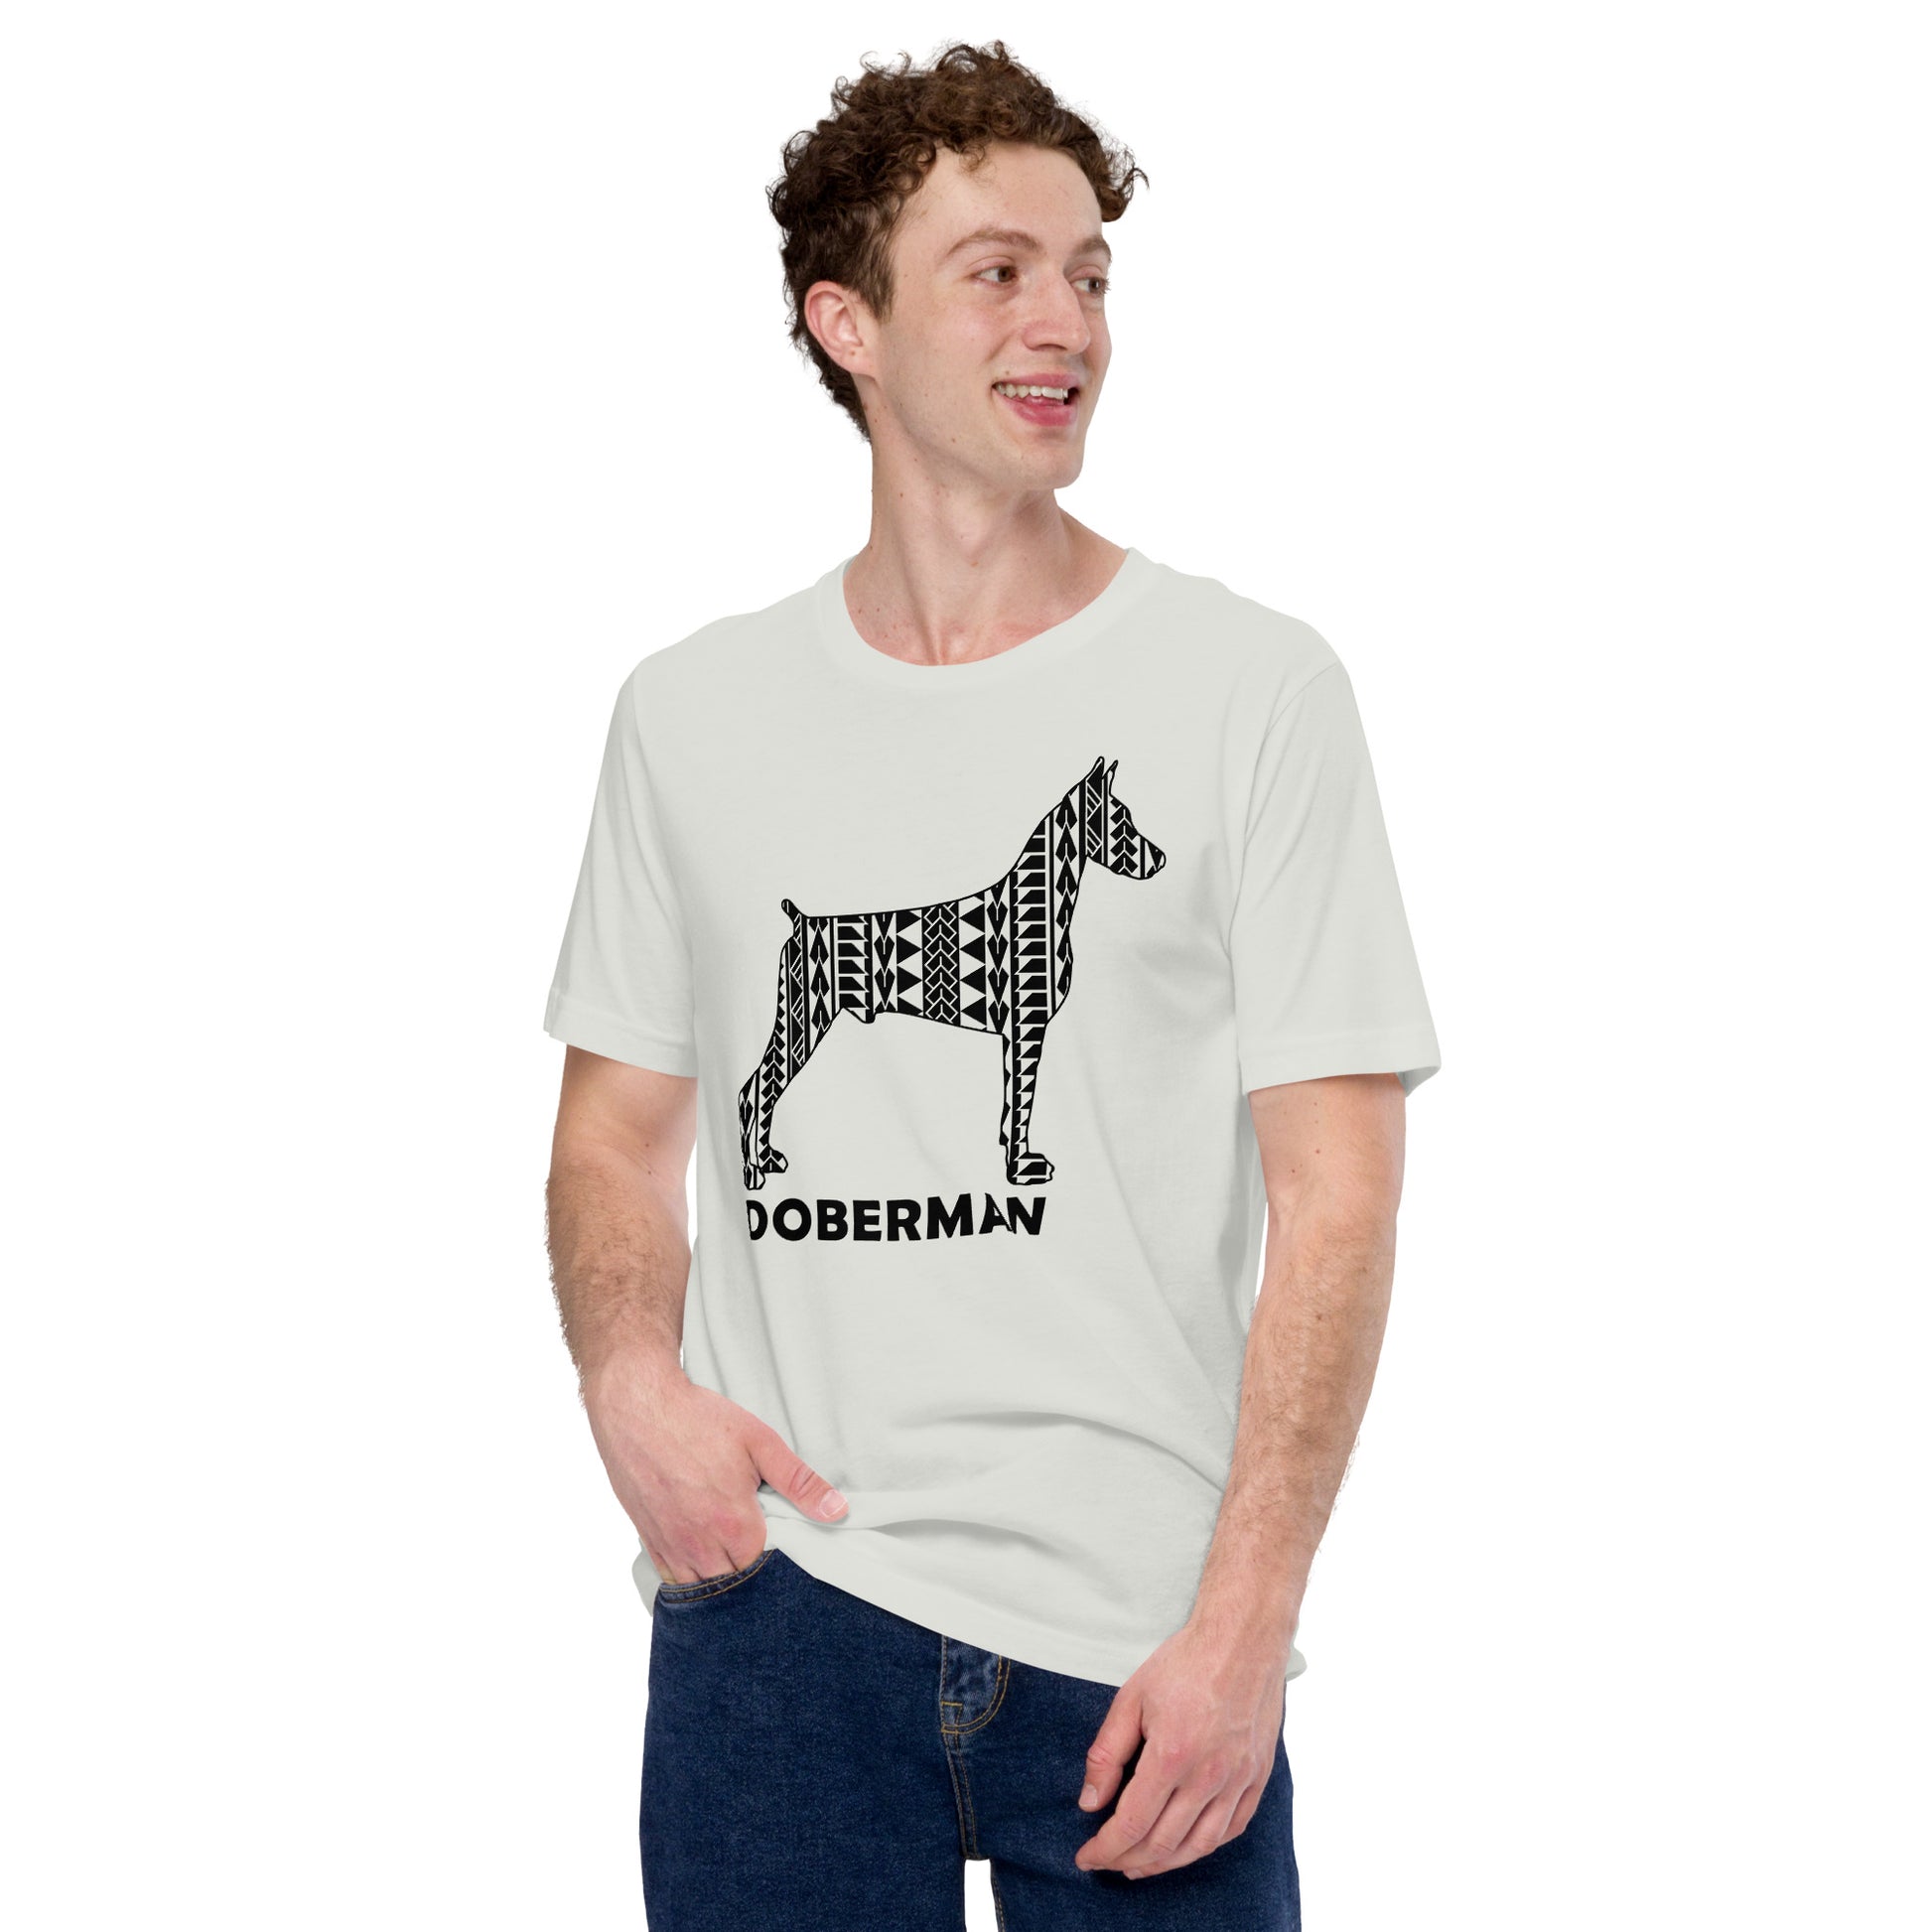 Doberman Polynesian t-shirt silver by Dog Artistry.